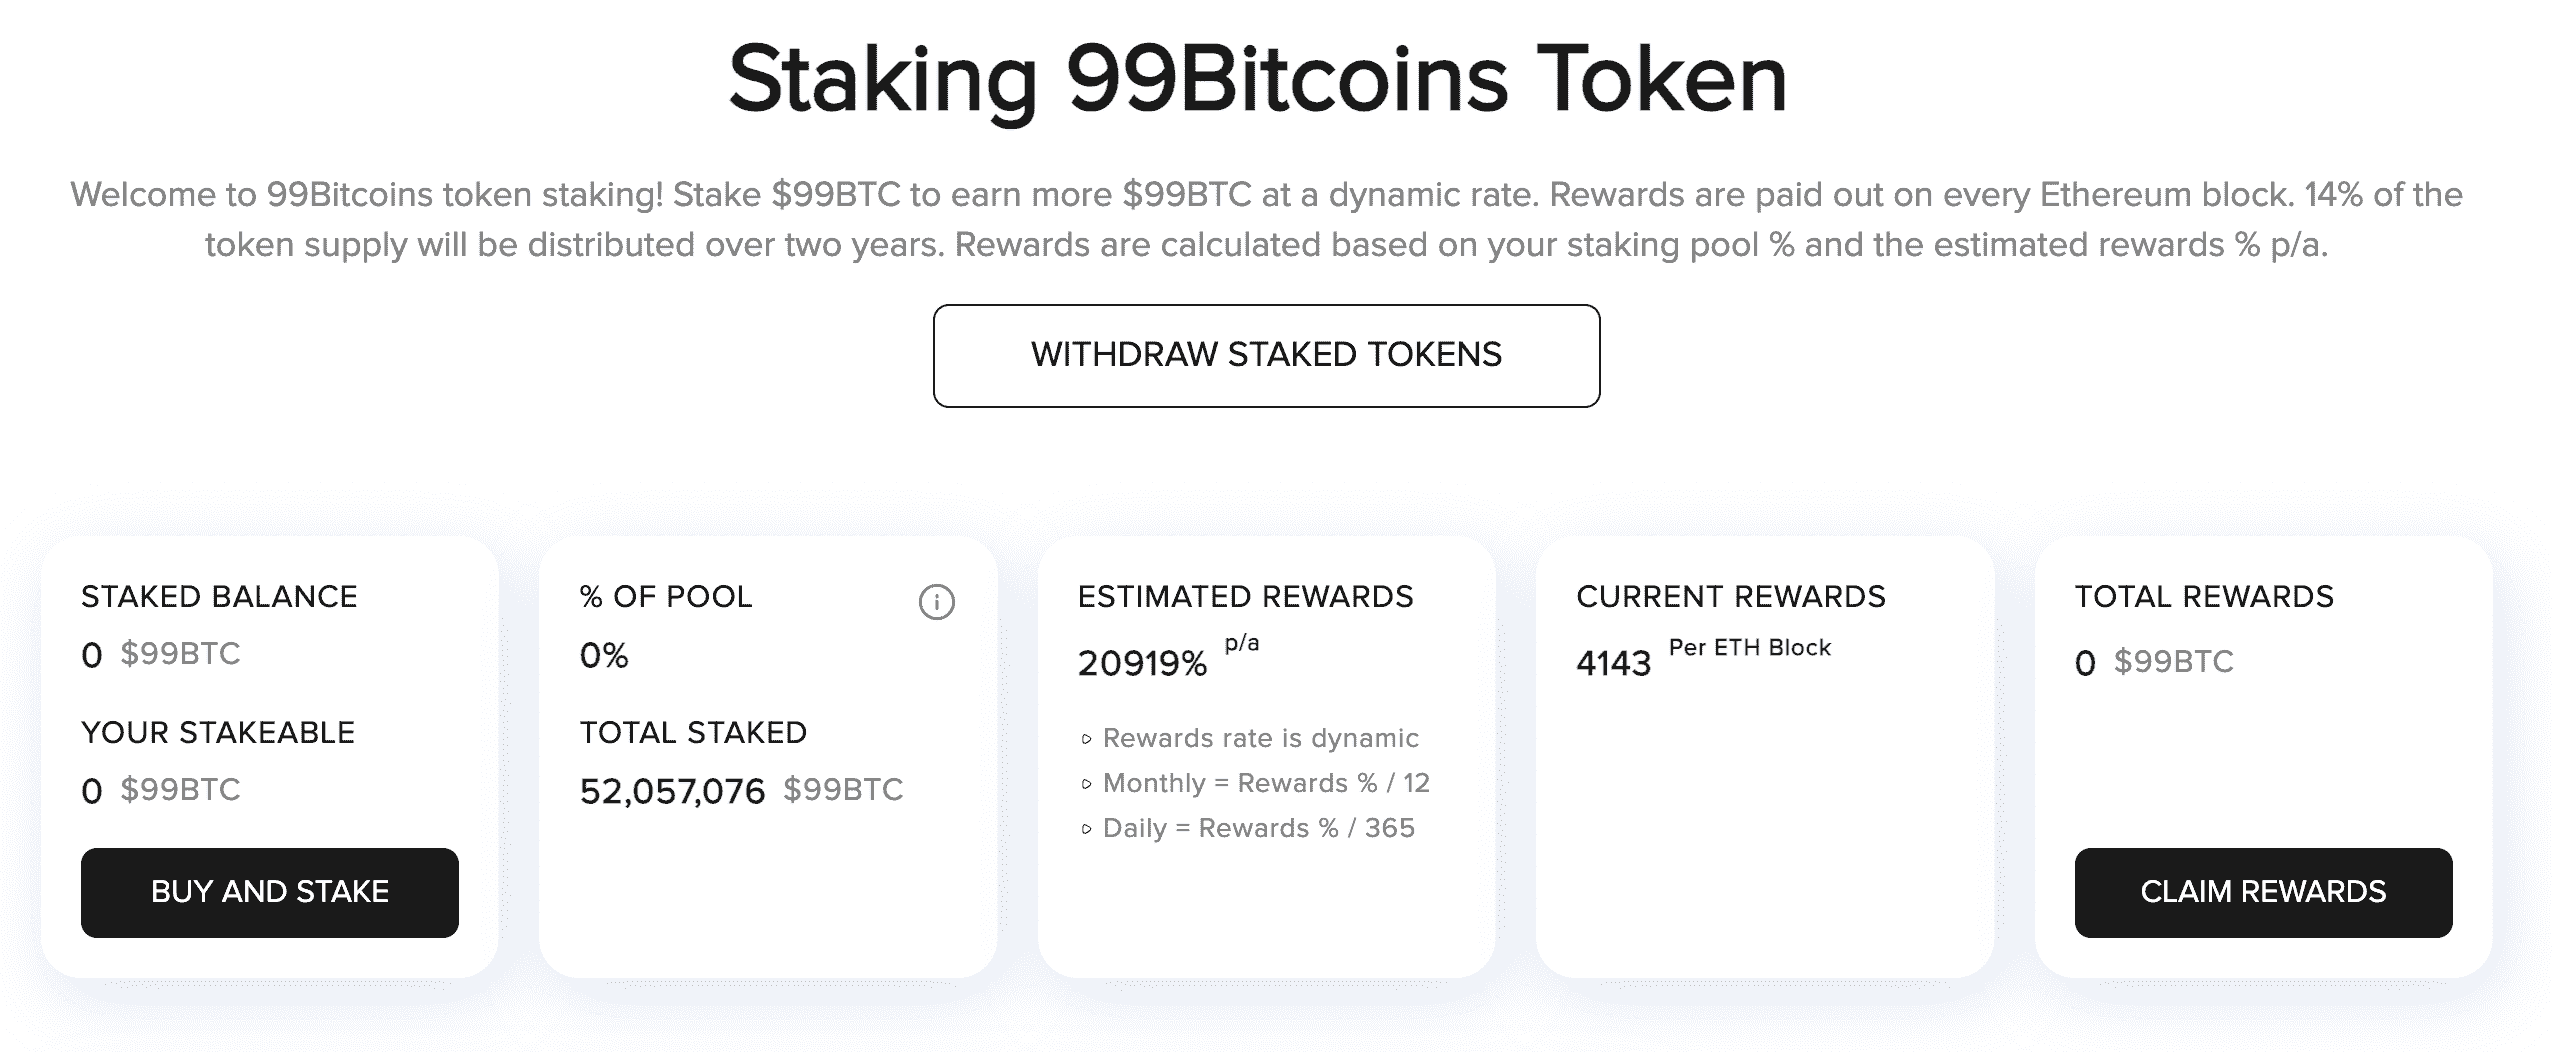 99Bitcoins staking